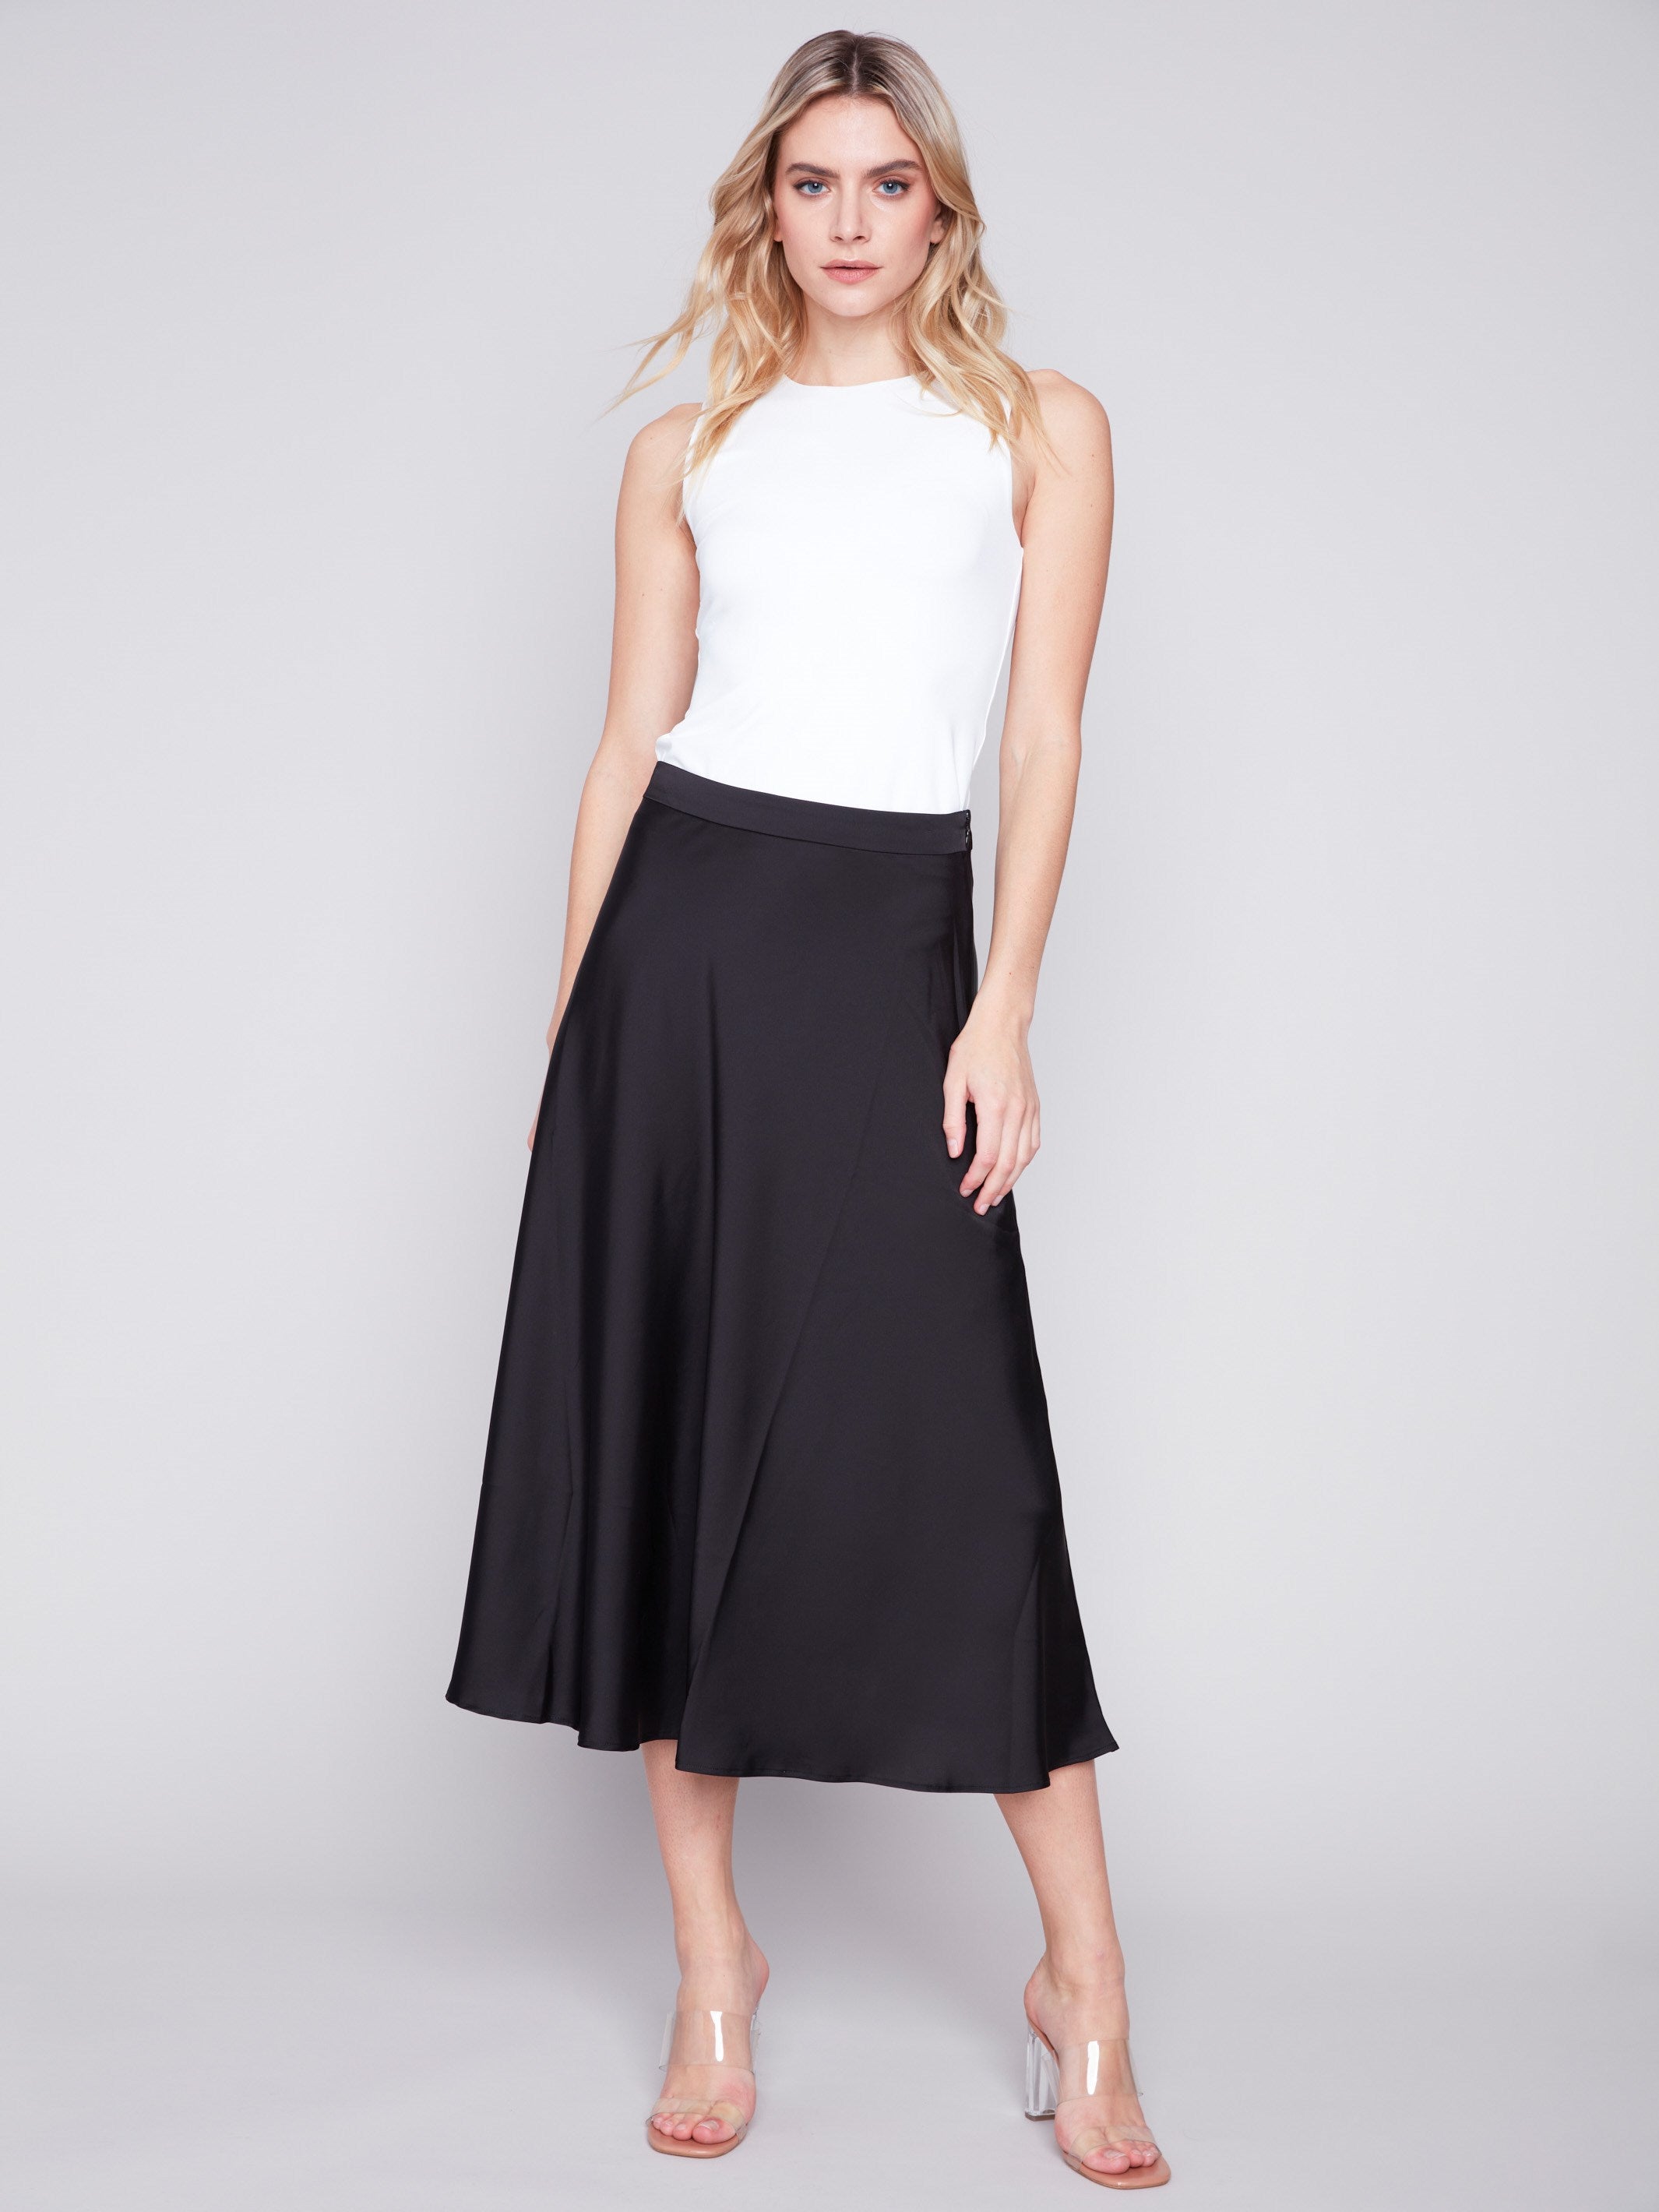 Long Satin Skirt - Black - Charlie B Collection Canada - Image 1